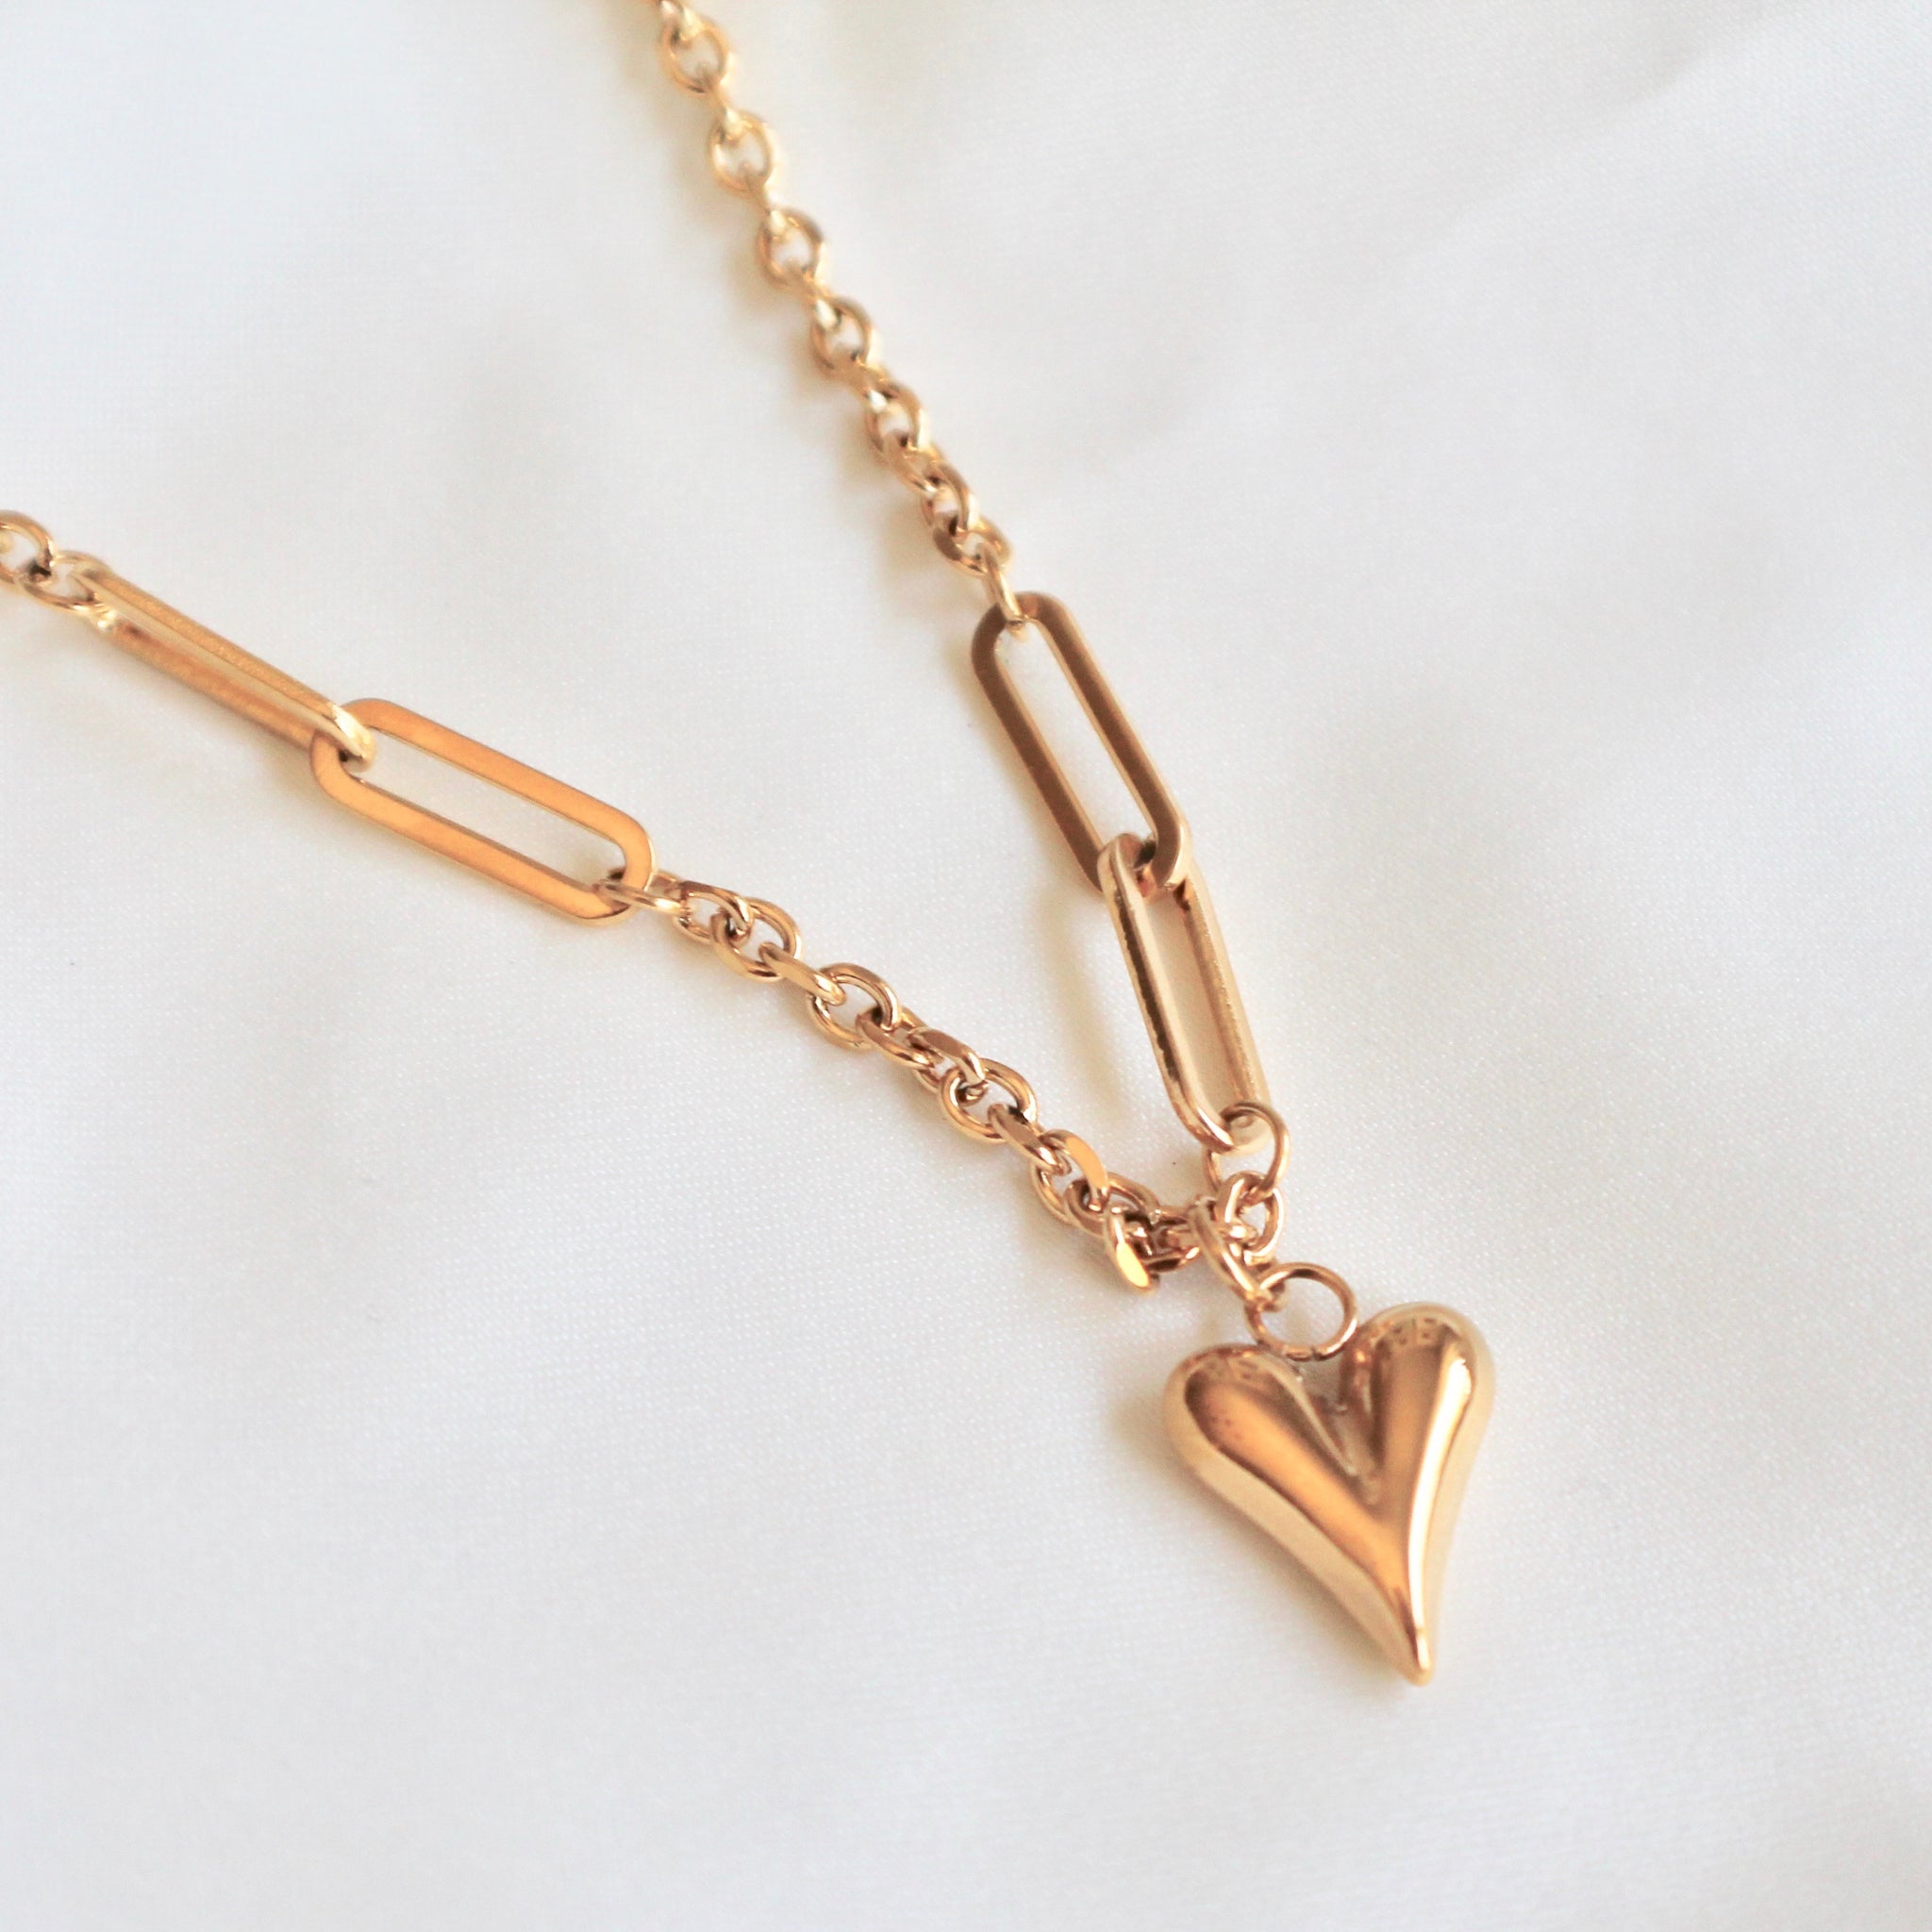 Heart paper clip necklace